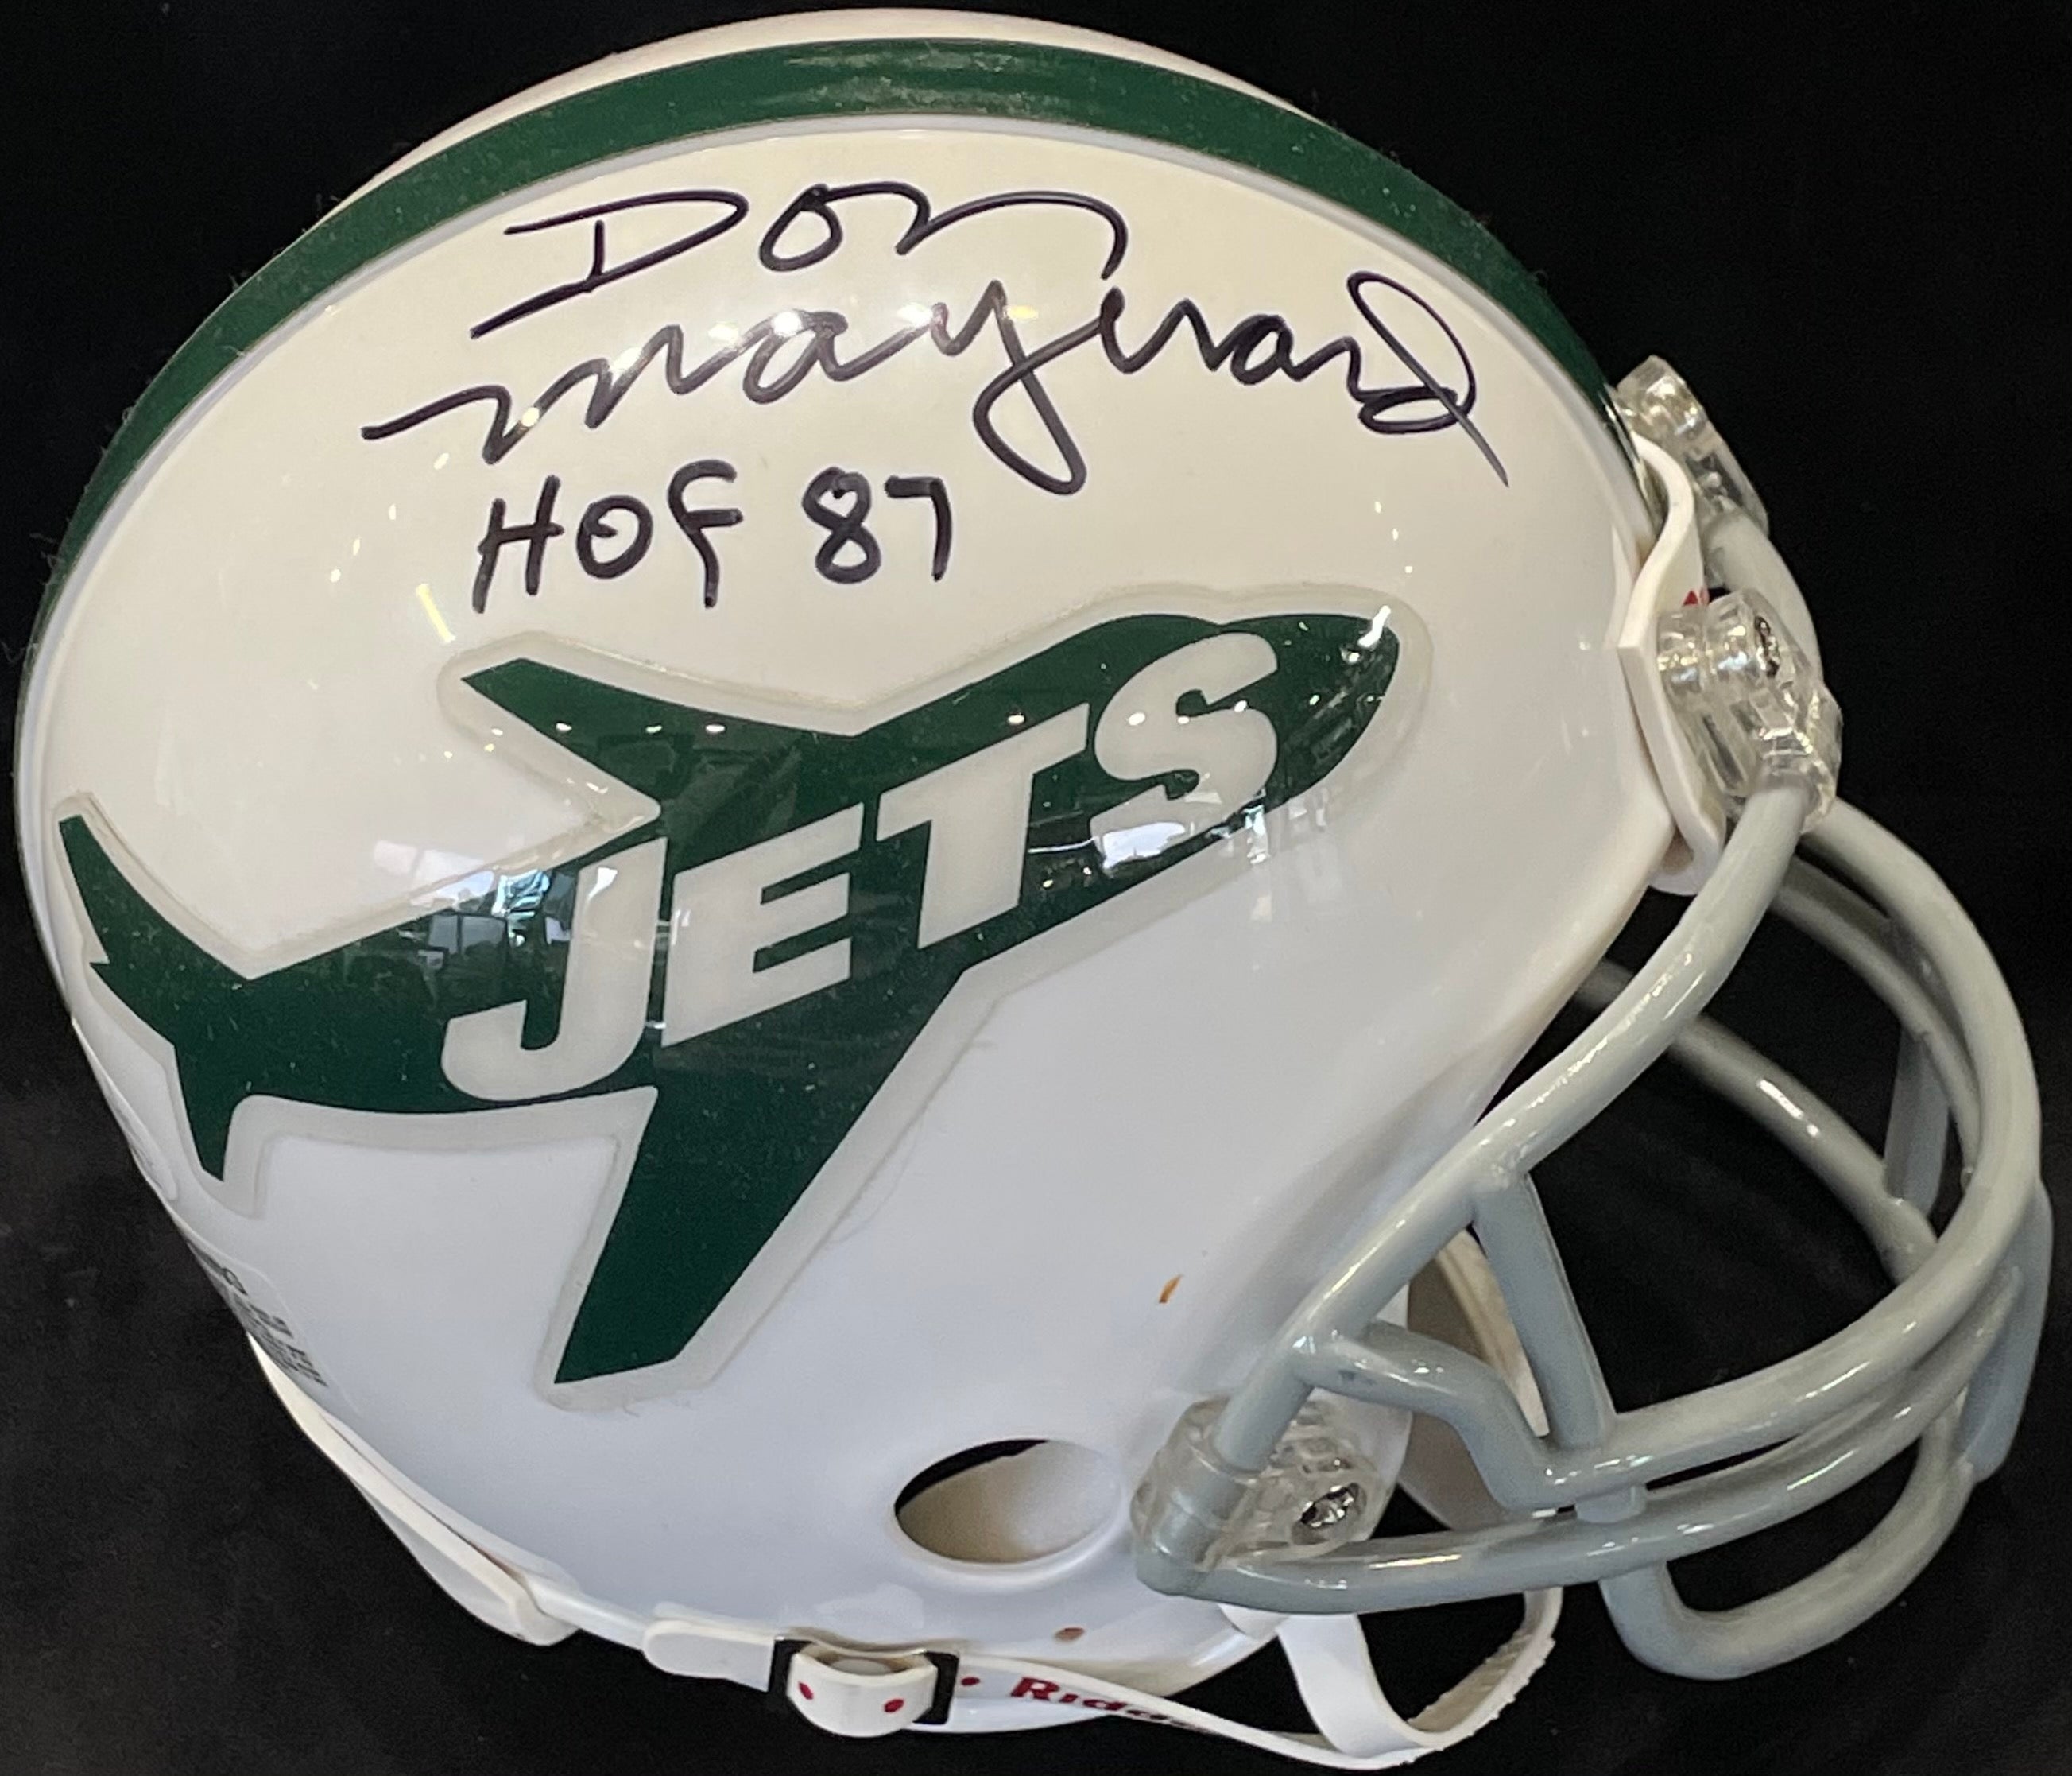 Don Maynard New York Jets Autographed Signed 8x10 Photo Inscribed